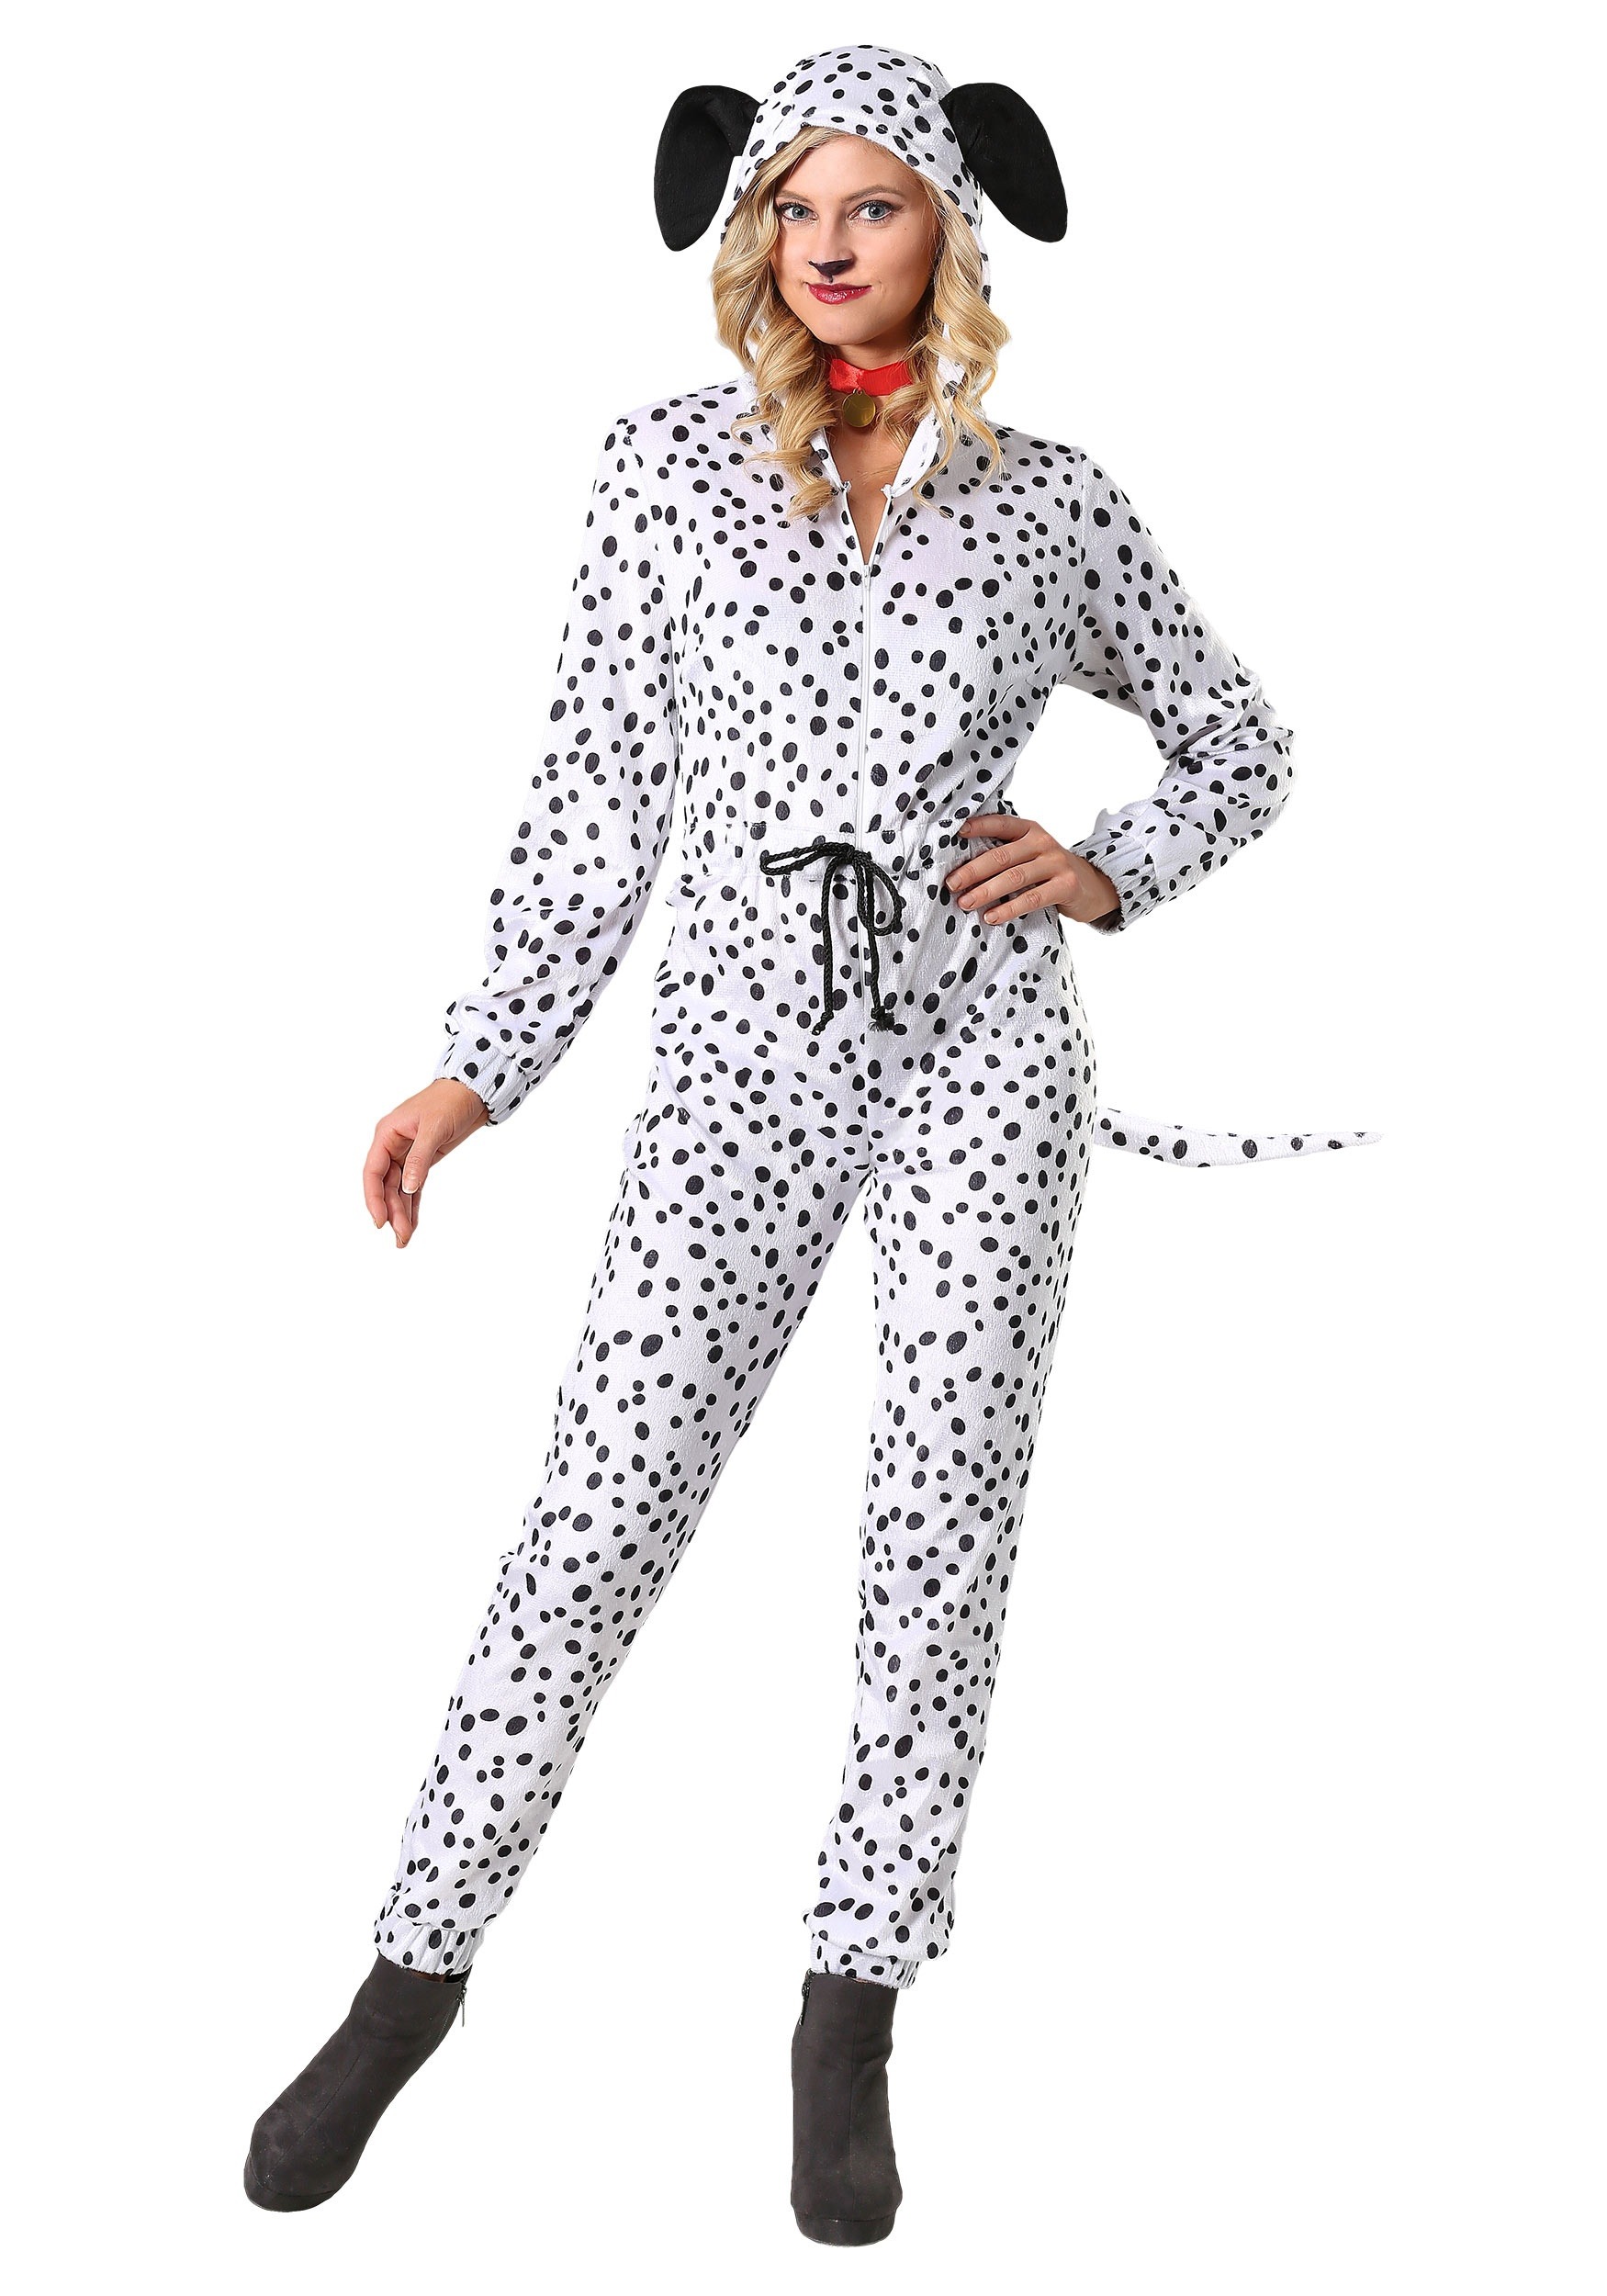 Cozy Dalmatian Jumpsuit Costume 1X 2X. adult dalmatian costume. 